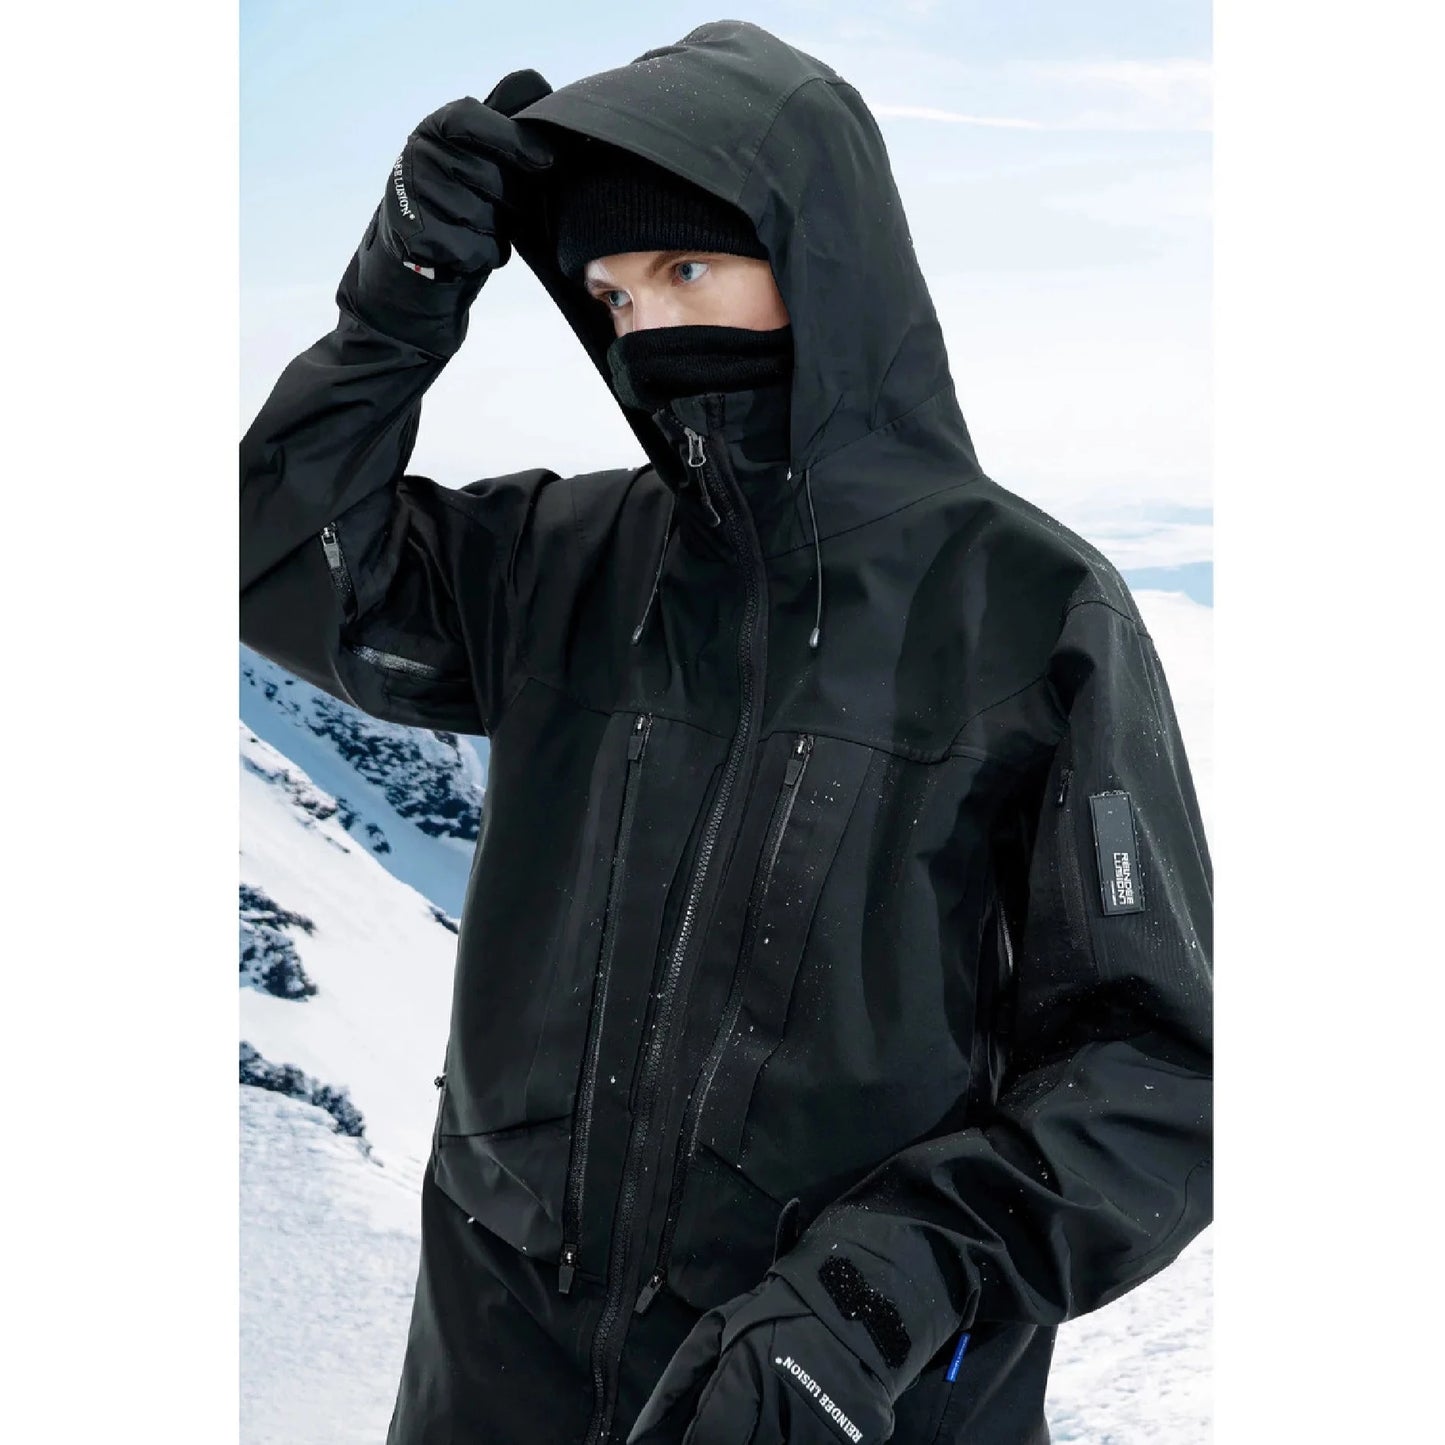 A man is wearing The 0107 Ski Down Techwear Jacket in Black Color